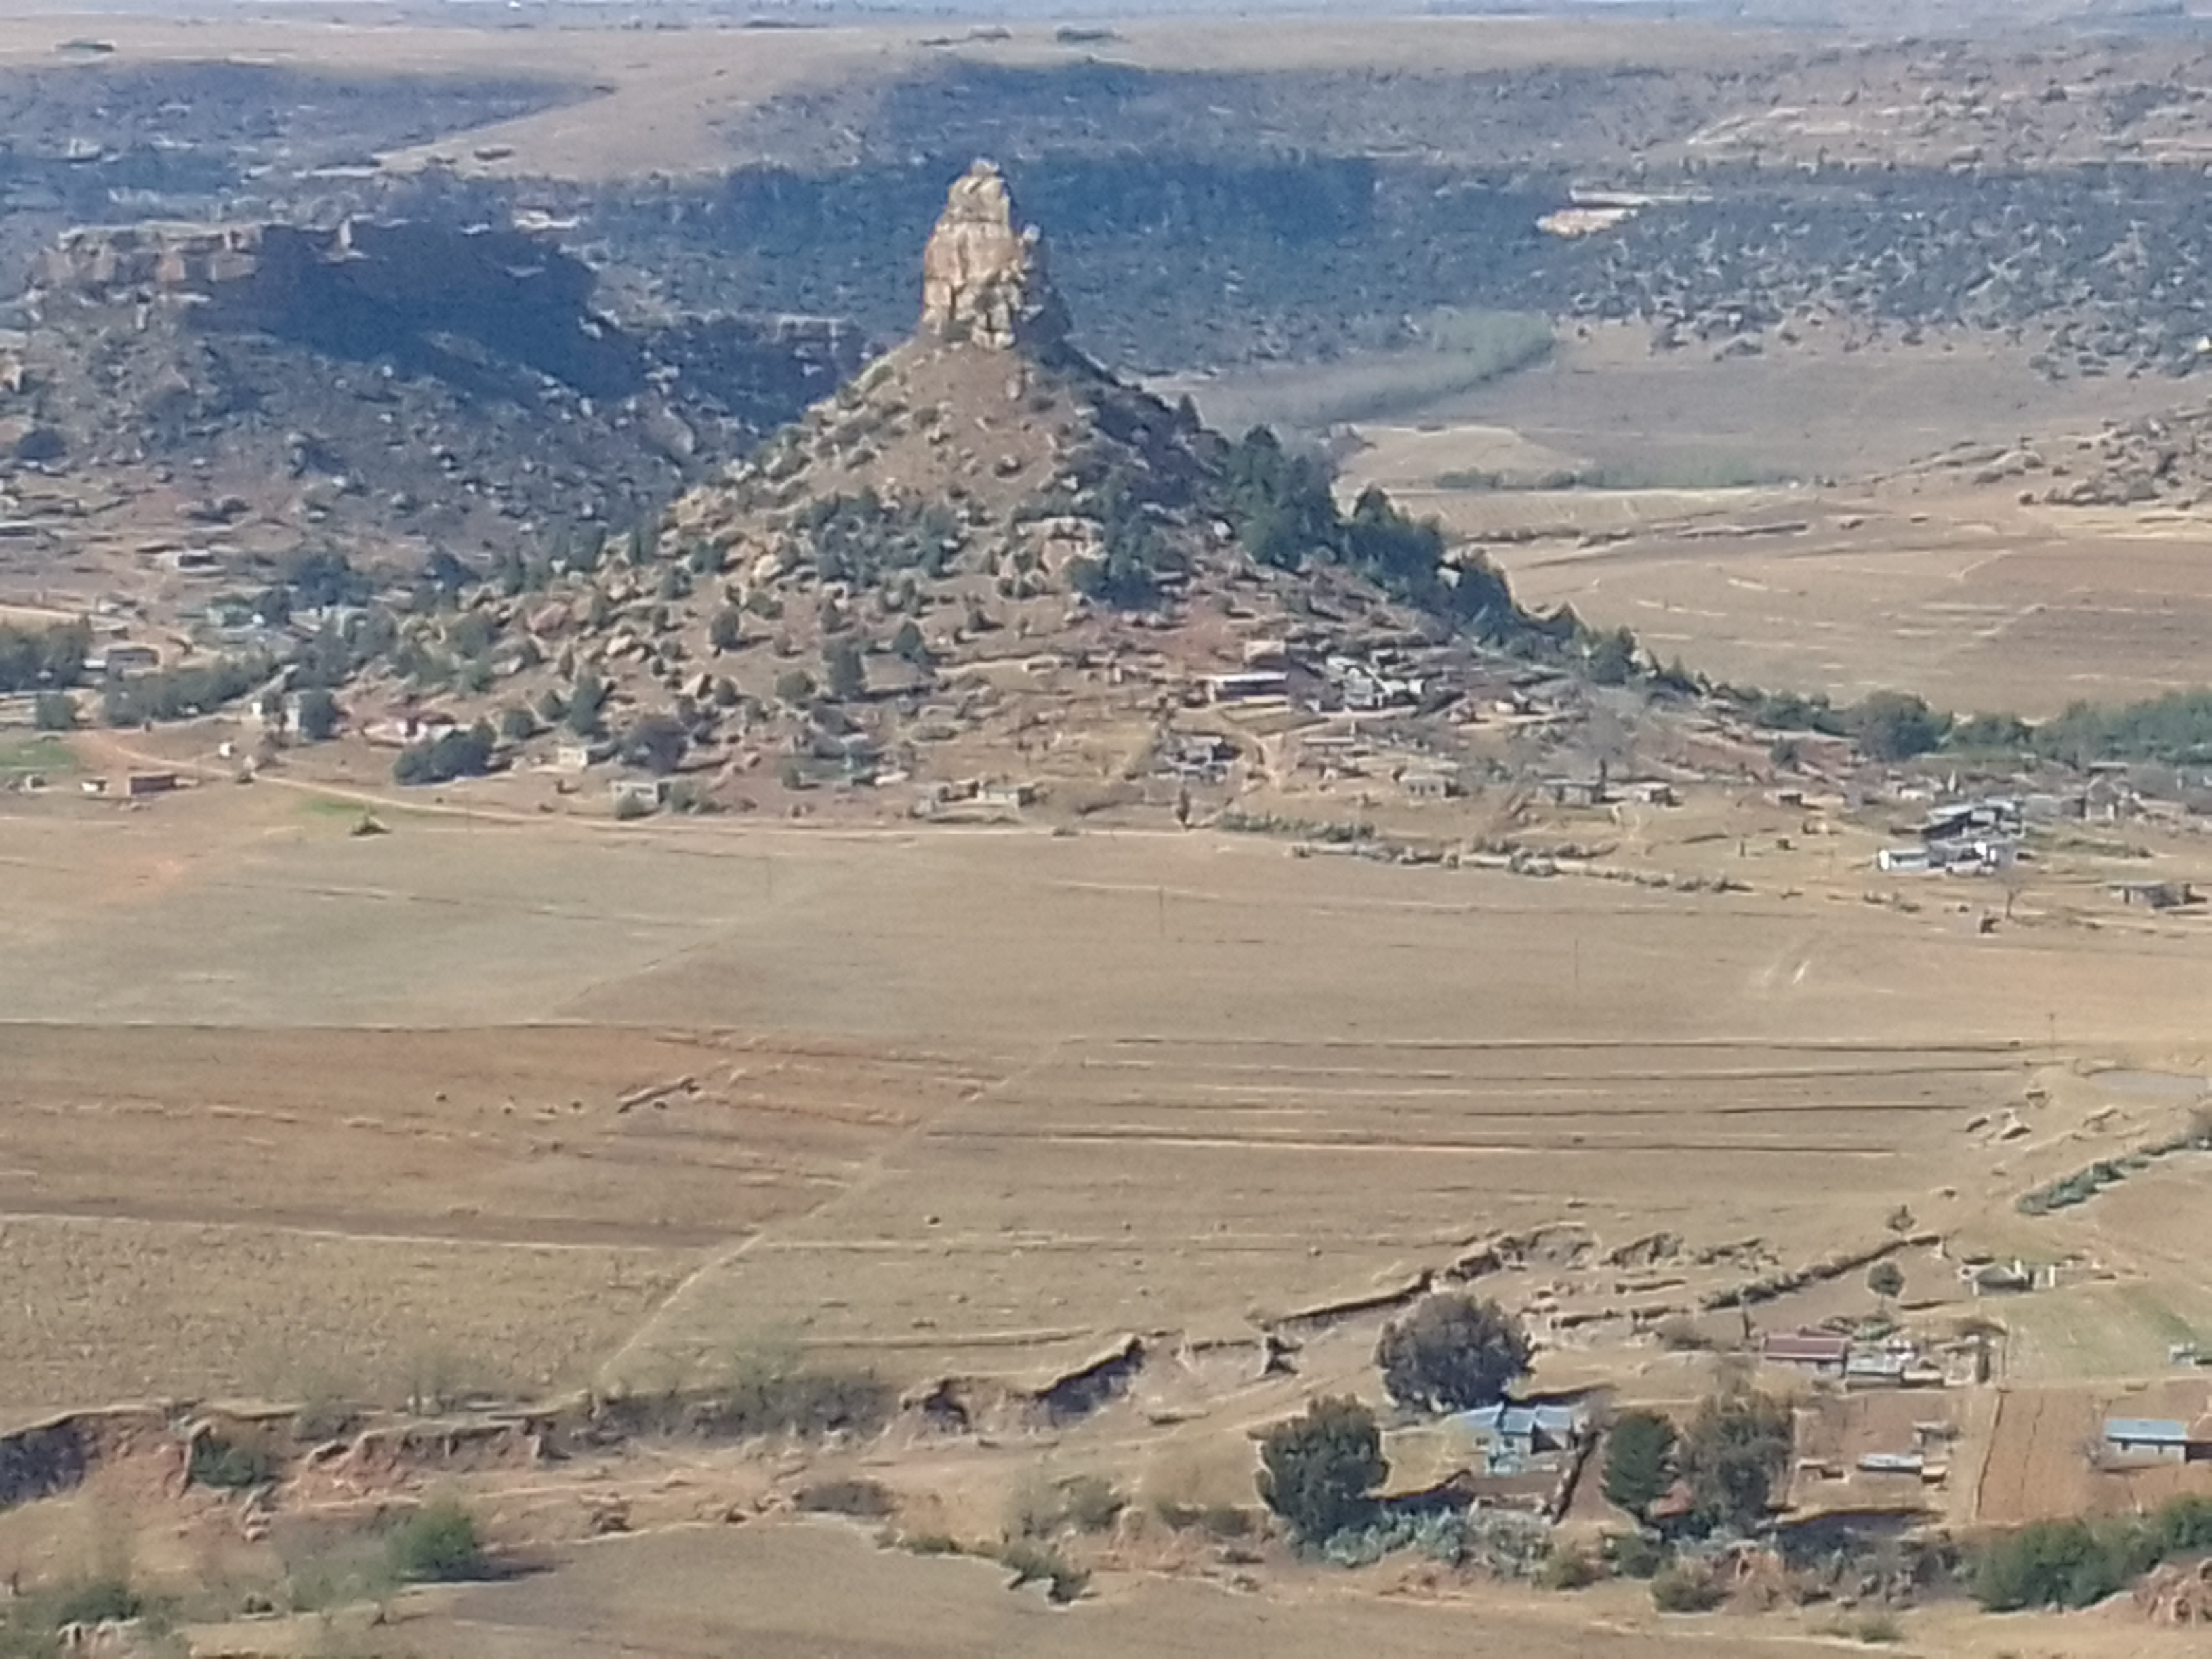 THE NOMAD - My journey to Thaba Bosiu plateau